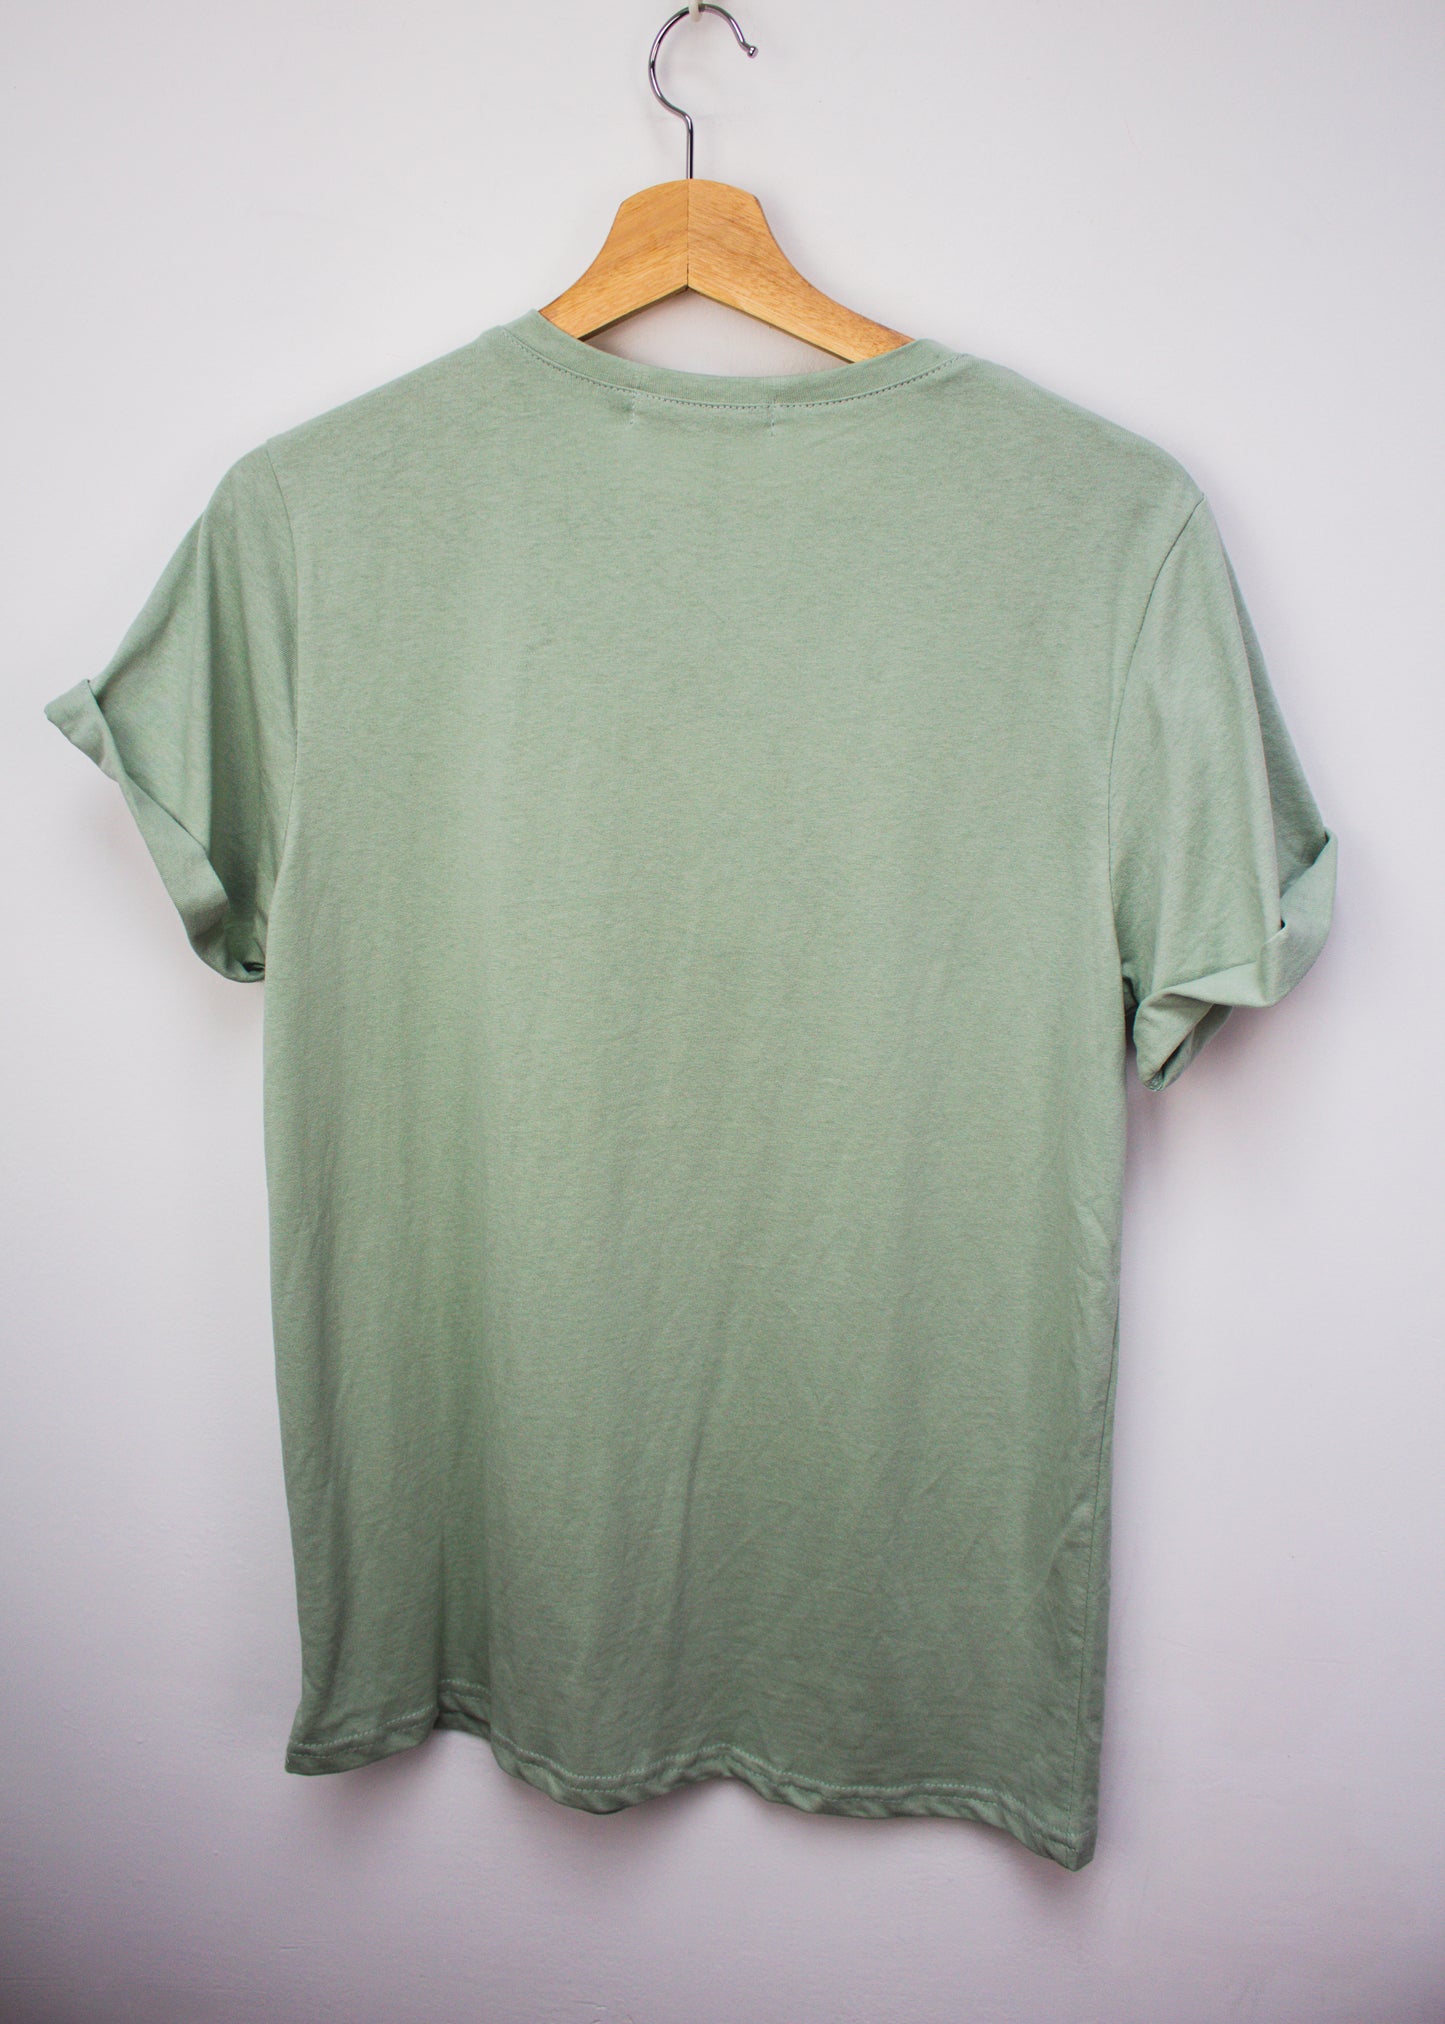 Ambika groen t-shirt maat M/L